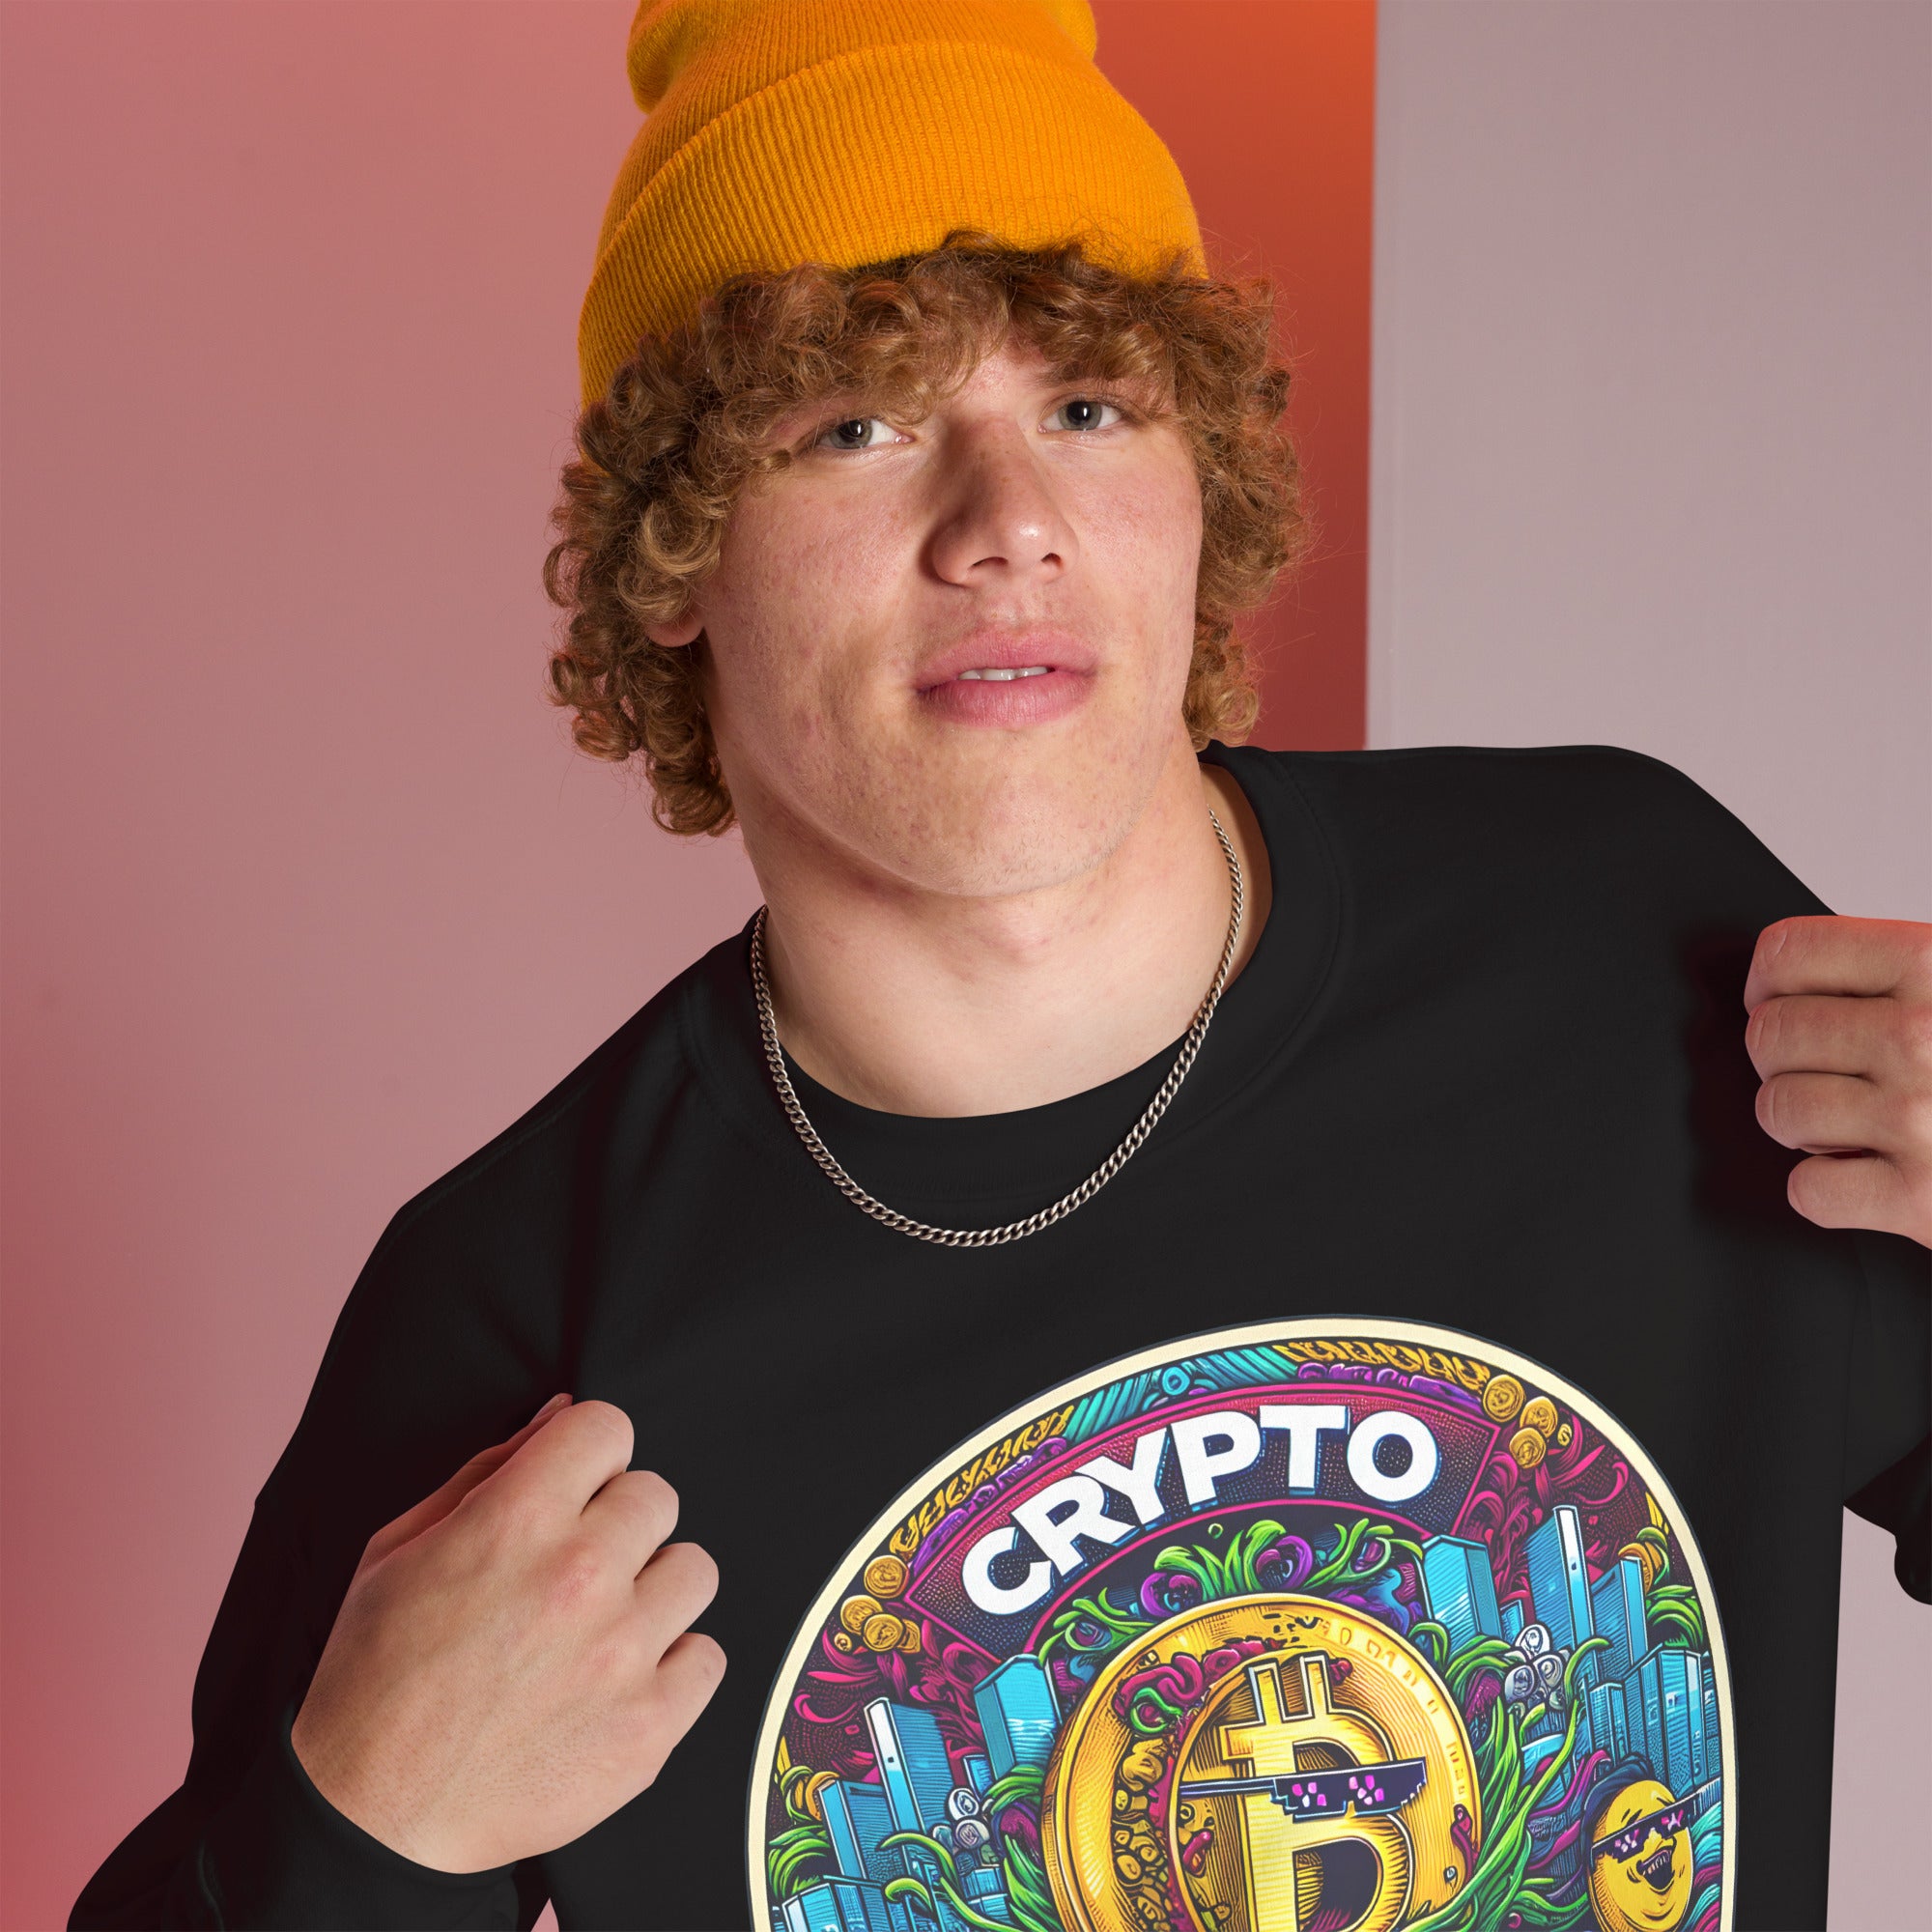 Meme Coins Rule! Crypto Junkie Bitcoin Altcoins Long Sleeve Pullover Sweatshirt